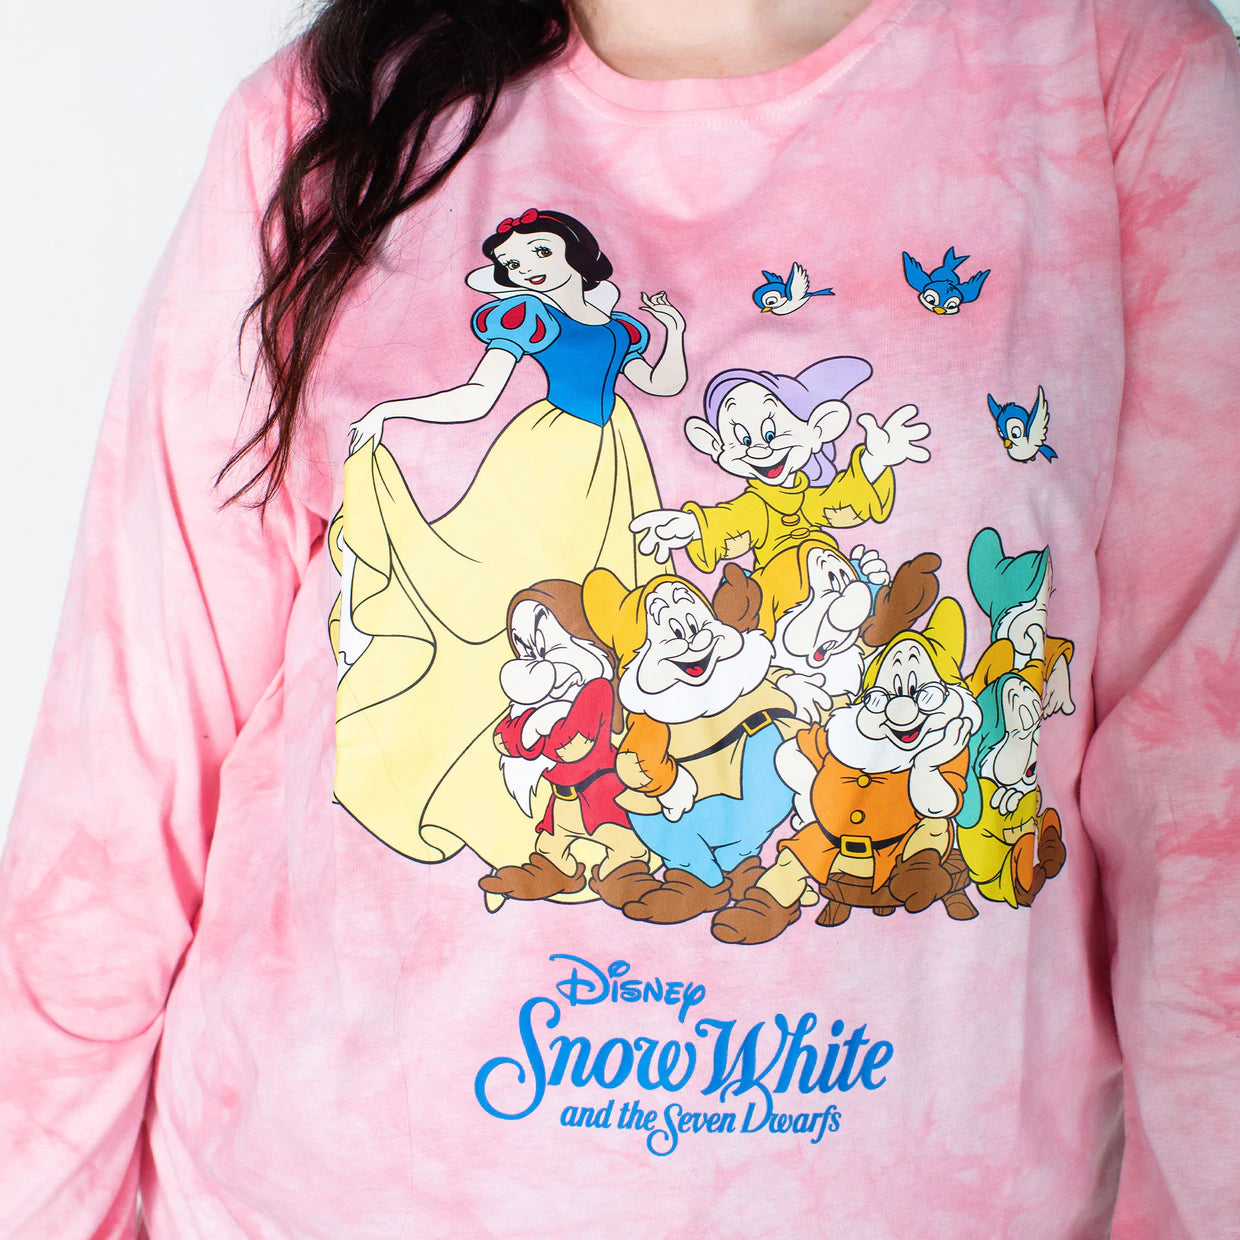 Snow White & the Seven Dwarfs (Disney) Tie-Dye Long Sleeve T-Shirt by Cakeworthy